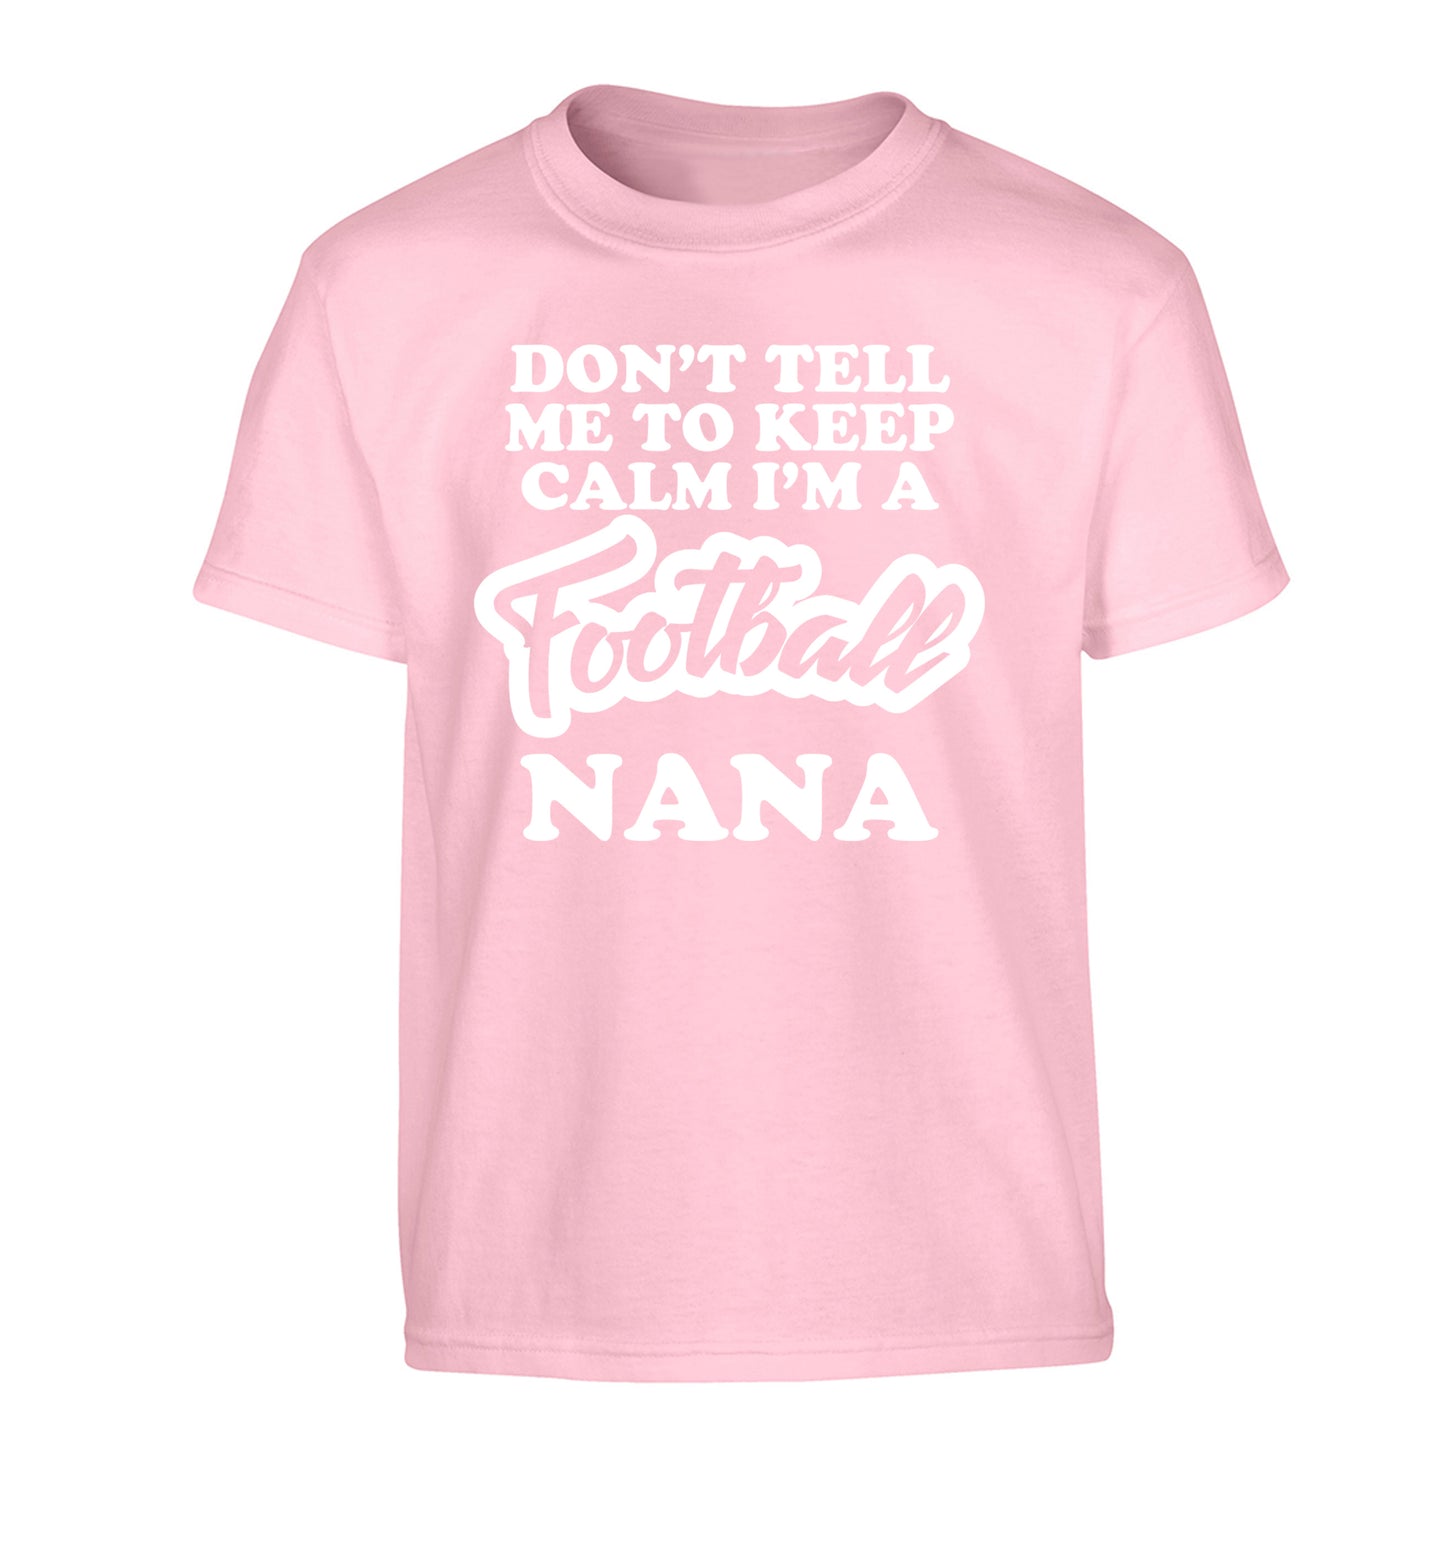 Don't tell me to keep calm I'm a football nana Children's light pink Tshirt 12-14 Years